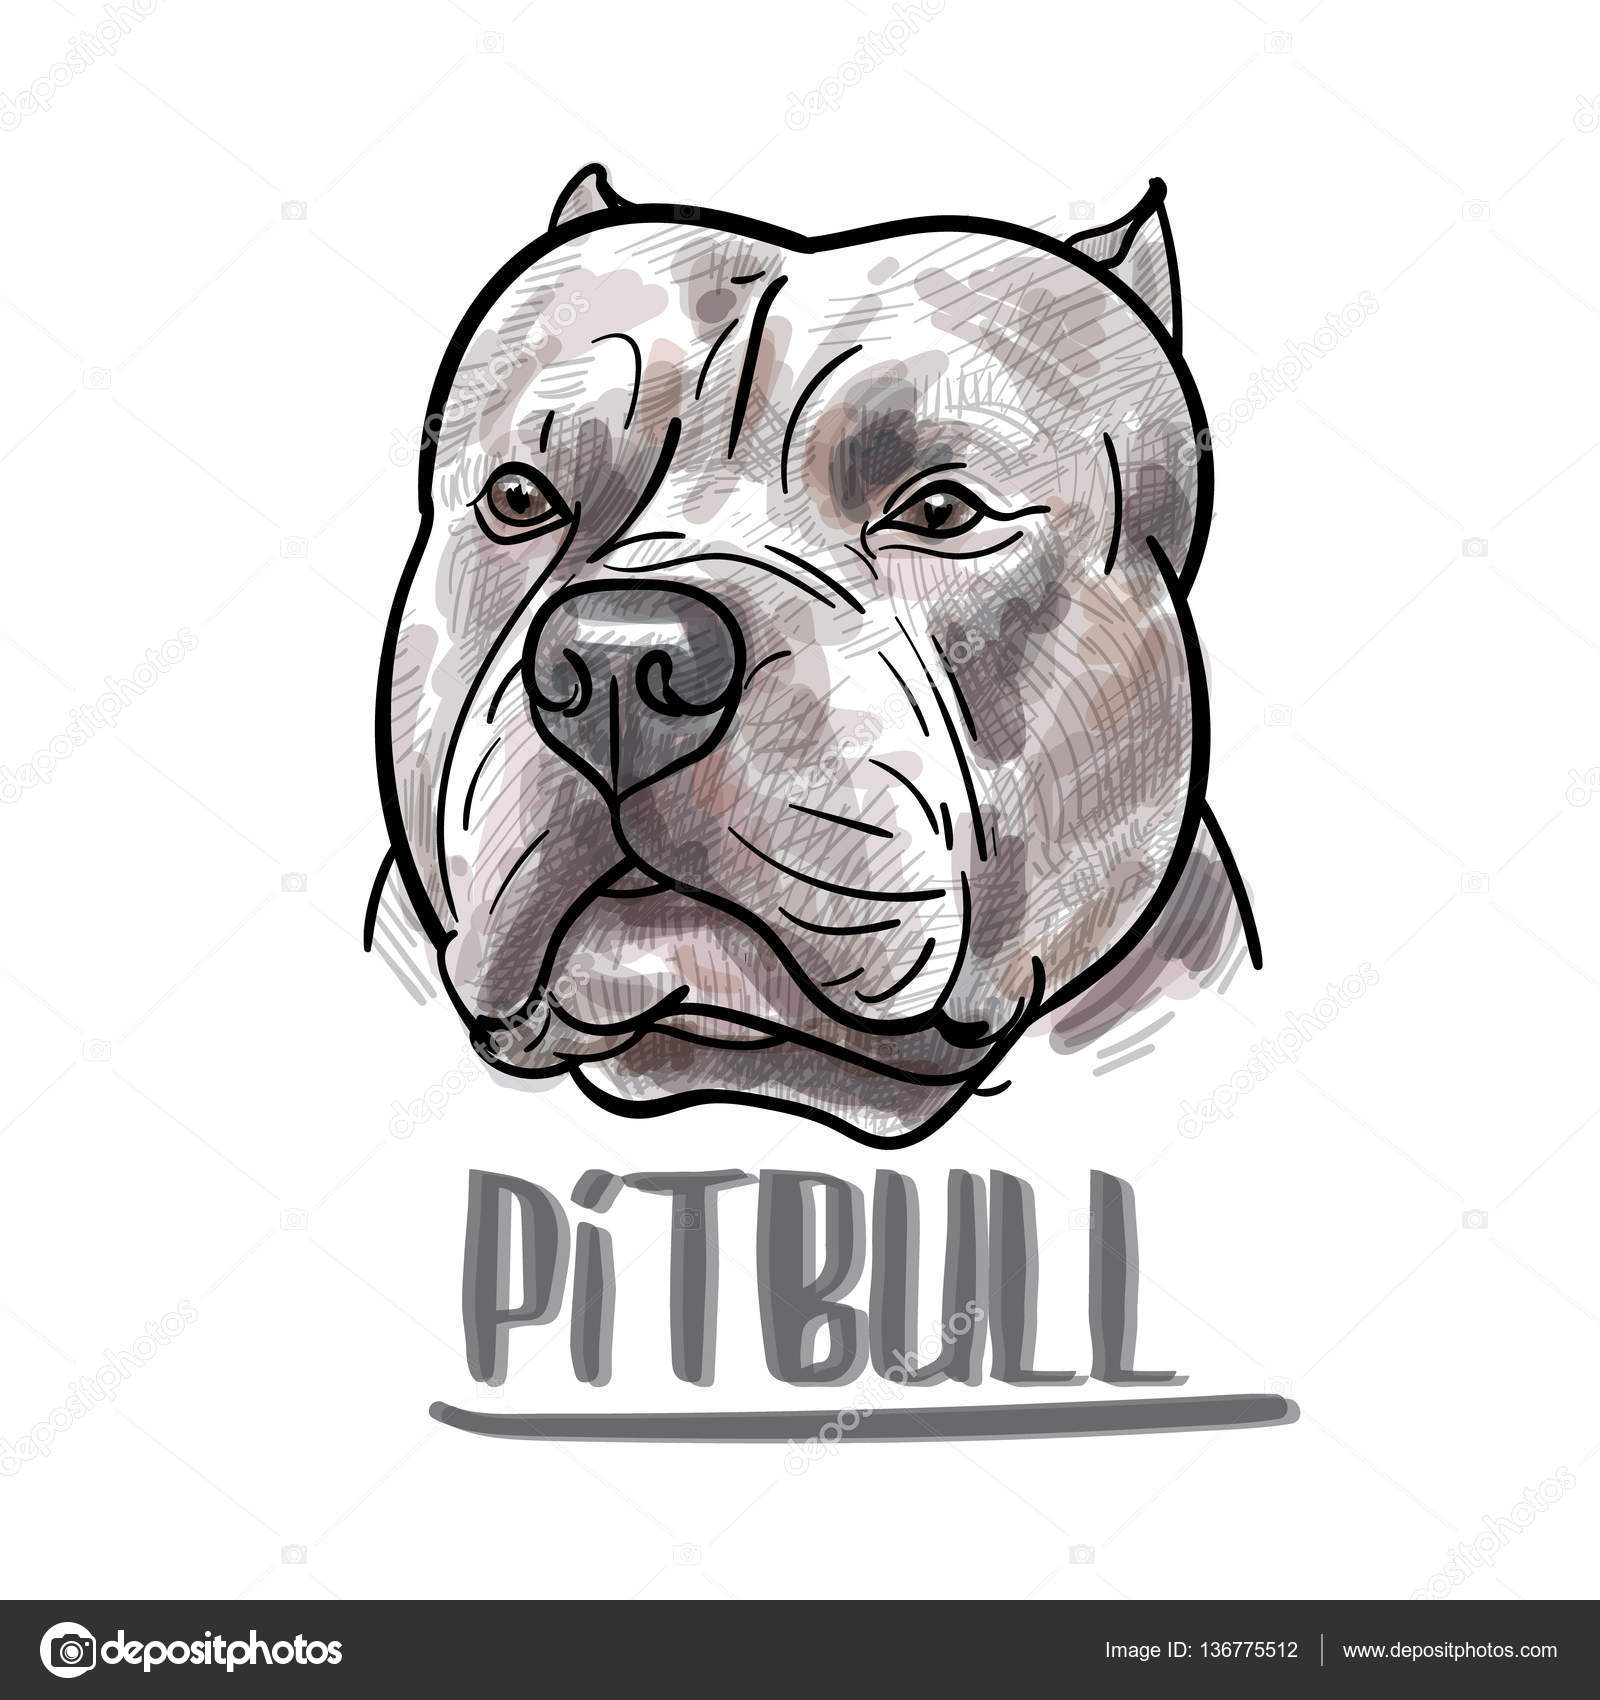 Dibujo pitbull imágenes de stock de arte vectorial | Depositphotos